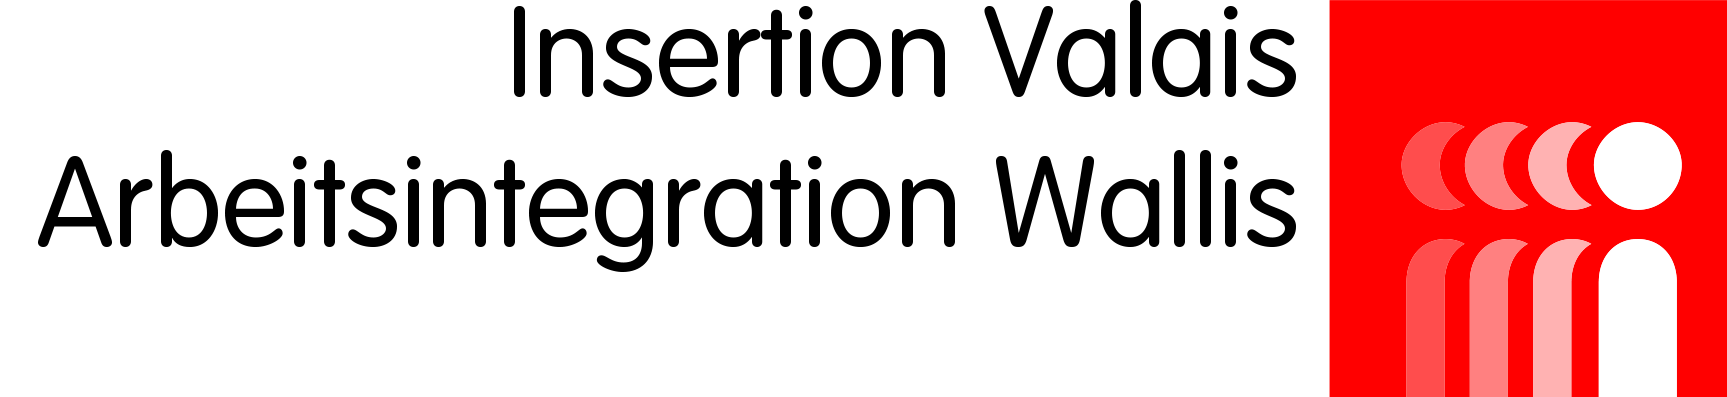 Insertion Valais